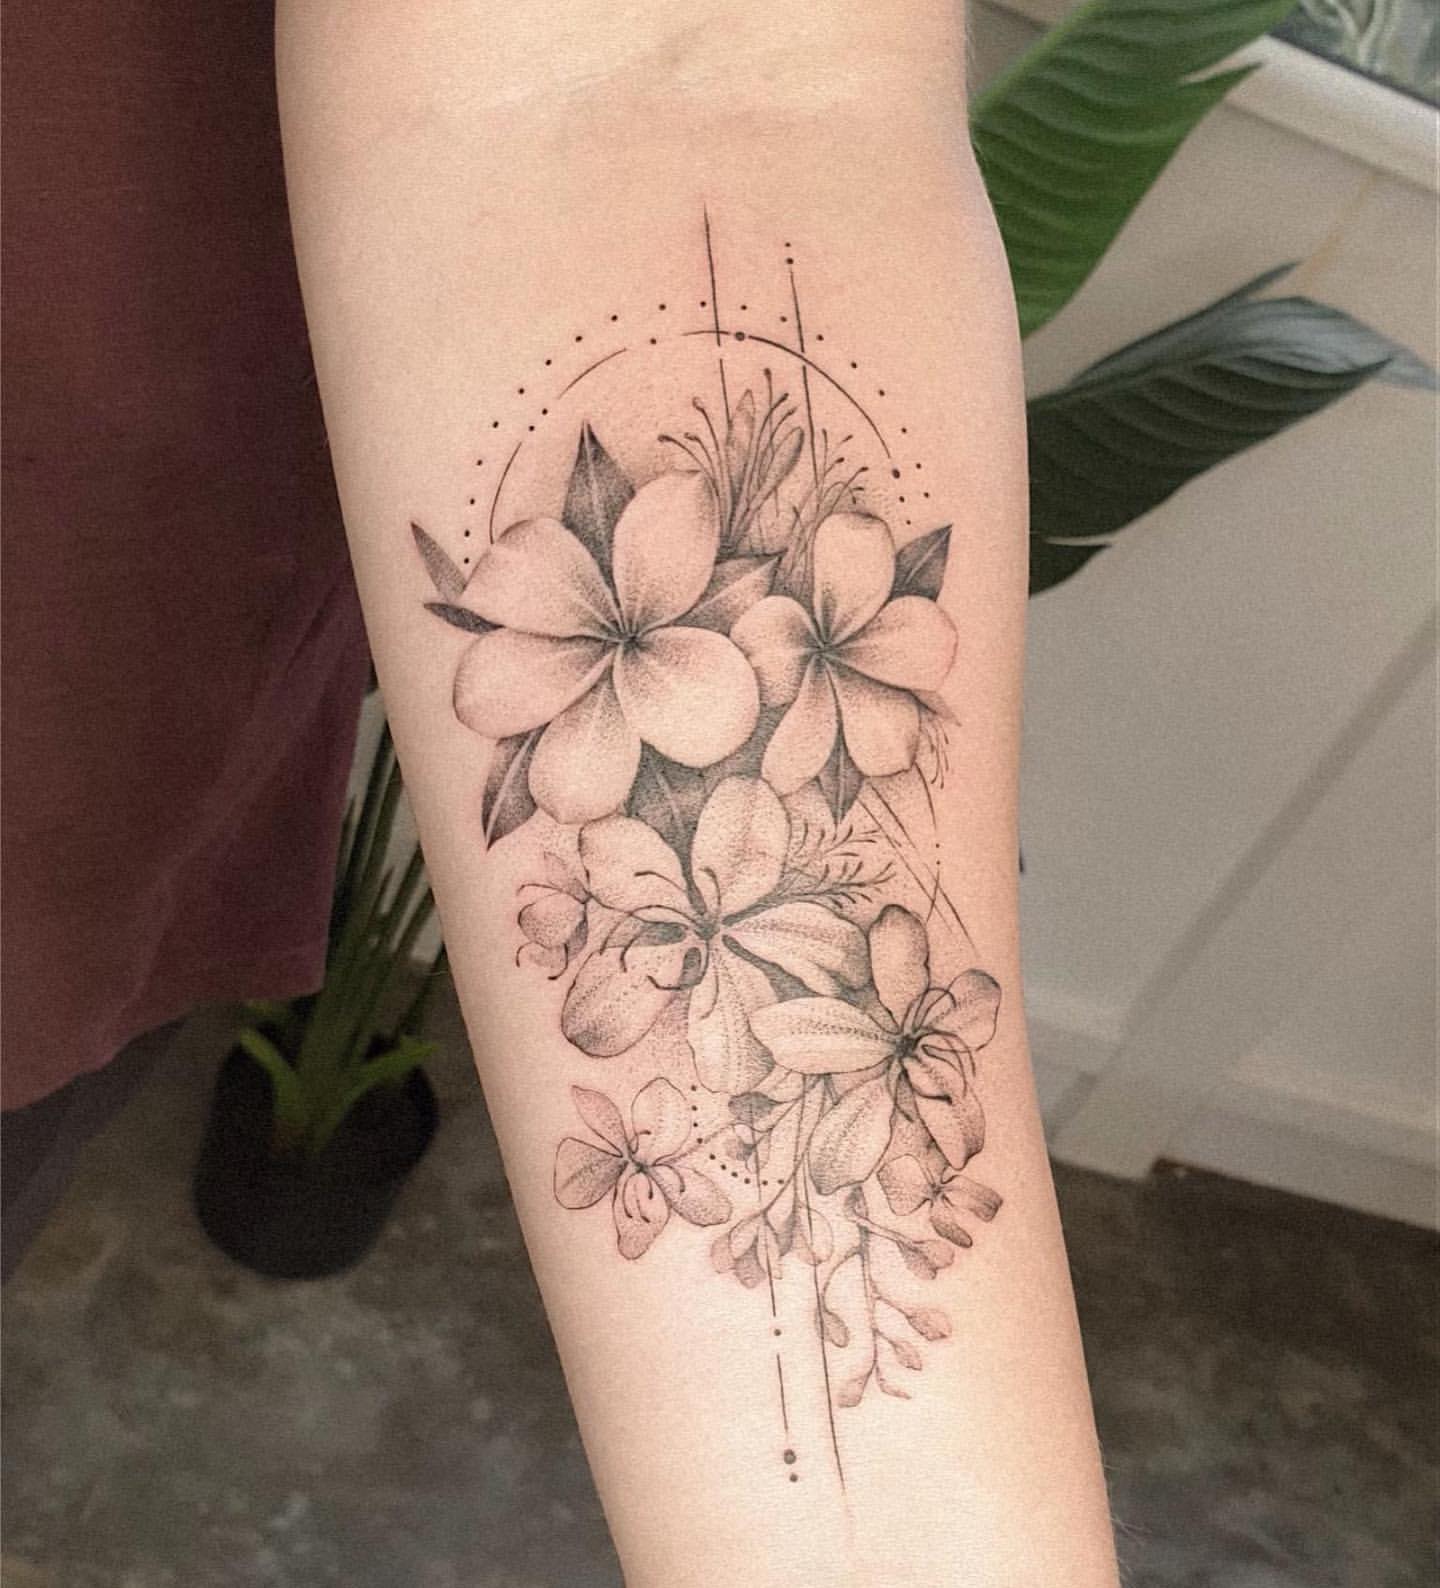 Pin by Daniella Jurado on ♧ ♥ ♀ Tatoo ♂ ♫ ☼ | Forearm tattoo women, Forearm  tattoos, Tattoos for women half sleeve